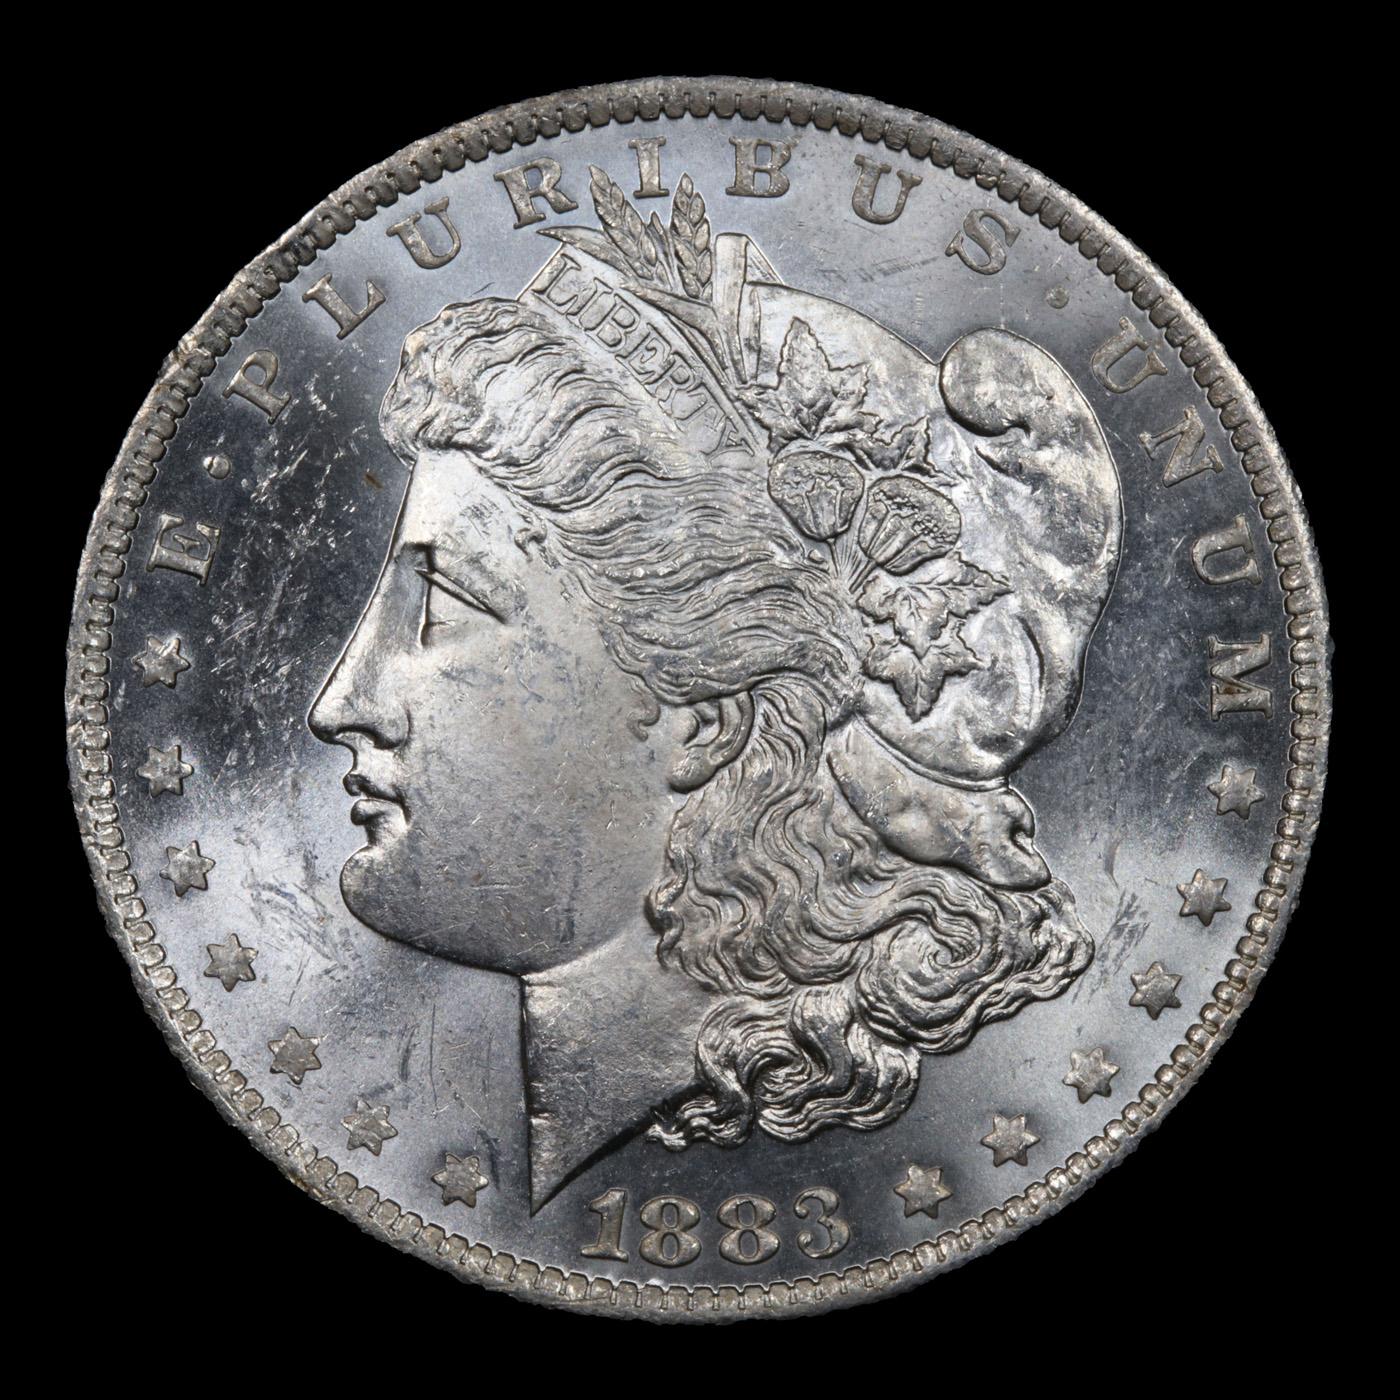 1883-o Morgan Dollar $1 Grades Select+ Unc